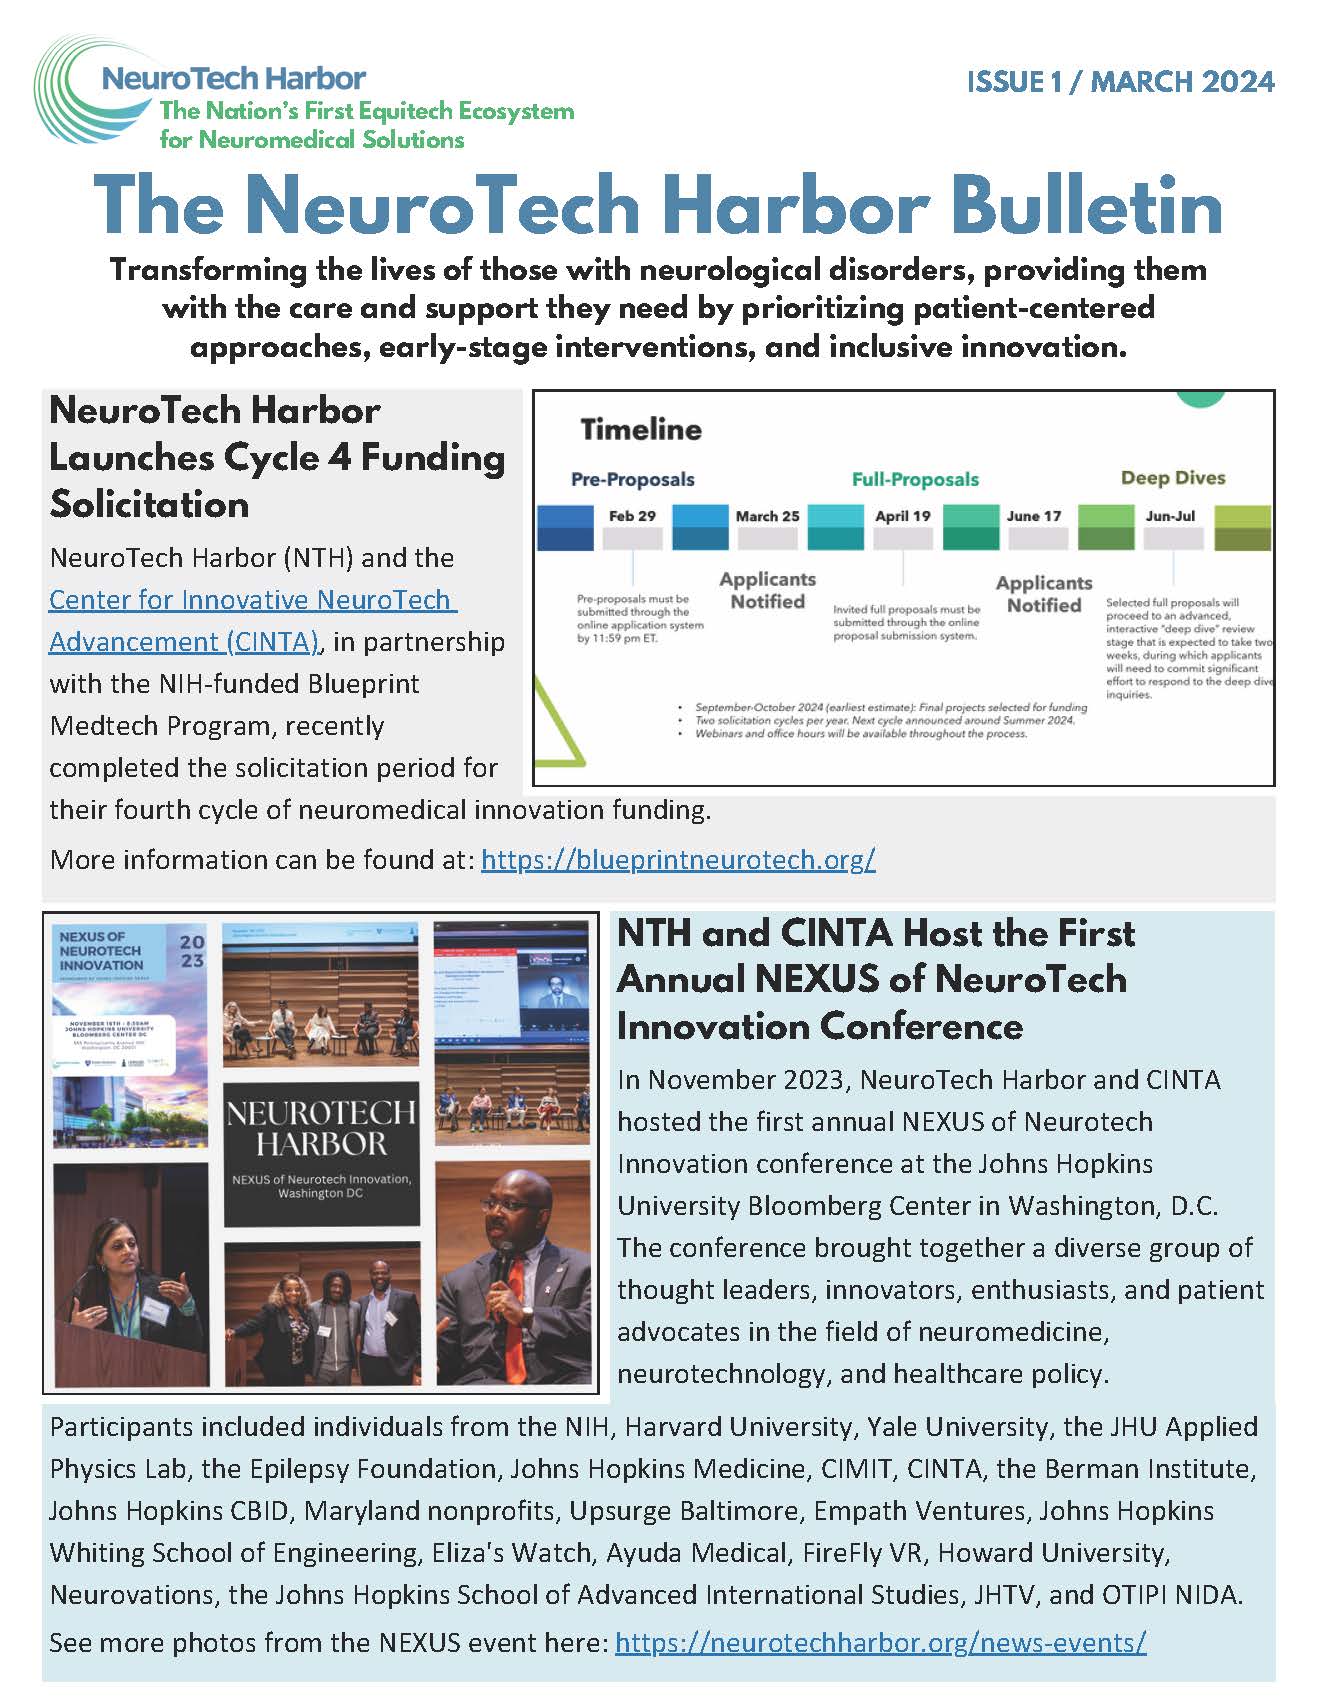 NeuroTech Harbor Bulletin March 2024